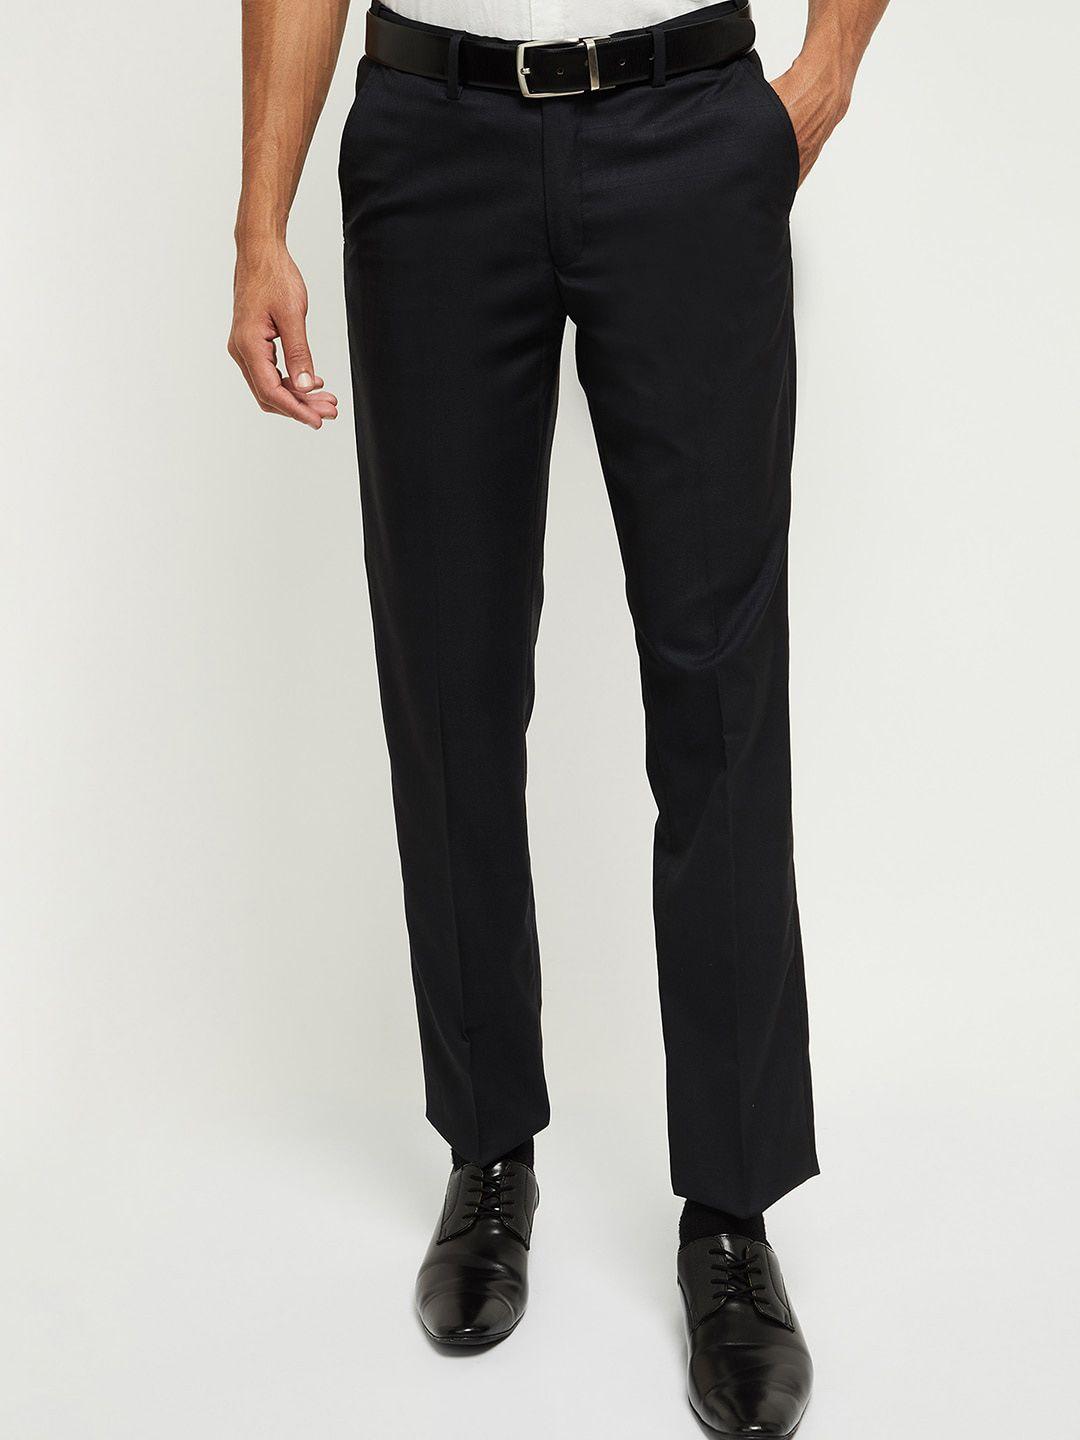 max men navy blue regular fit textured formal trousers